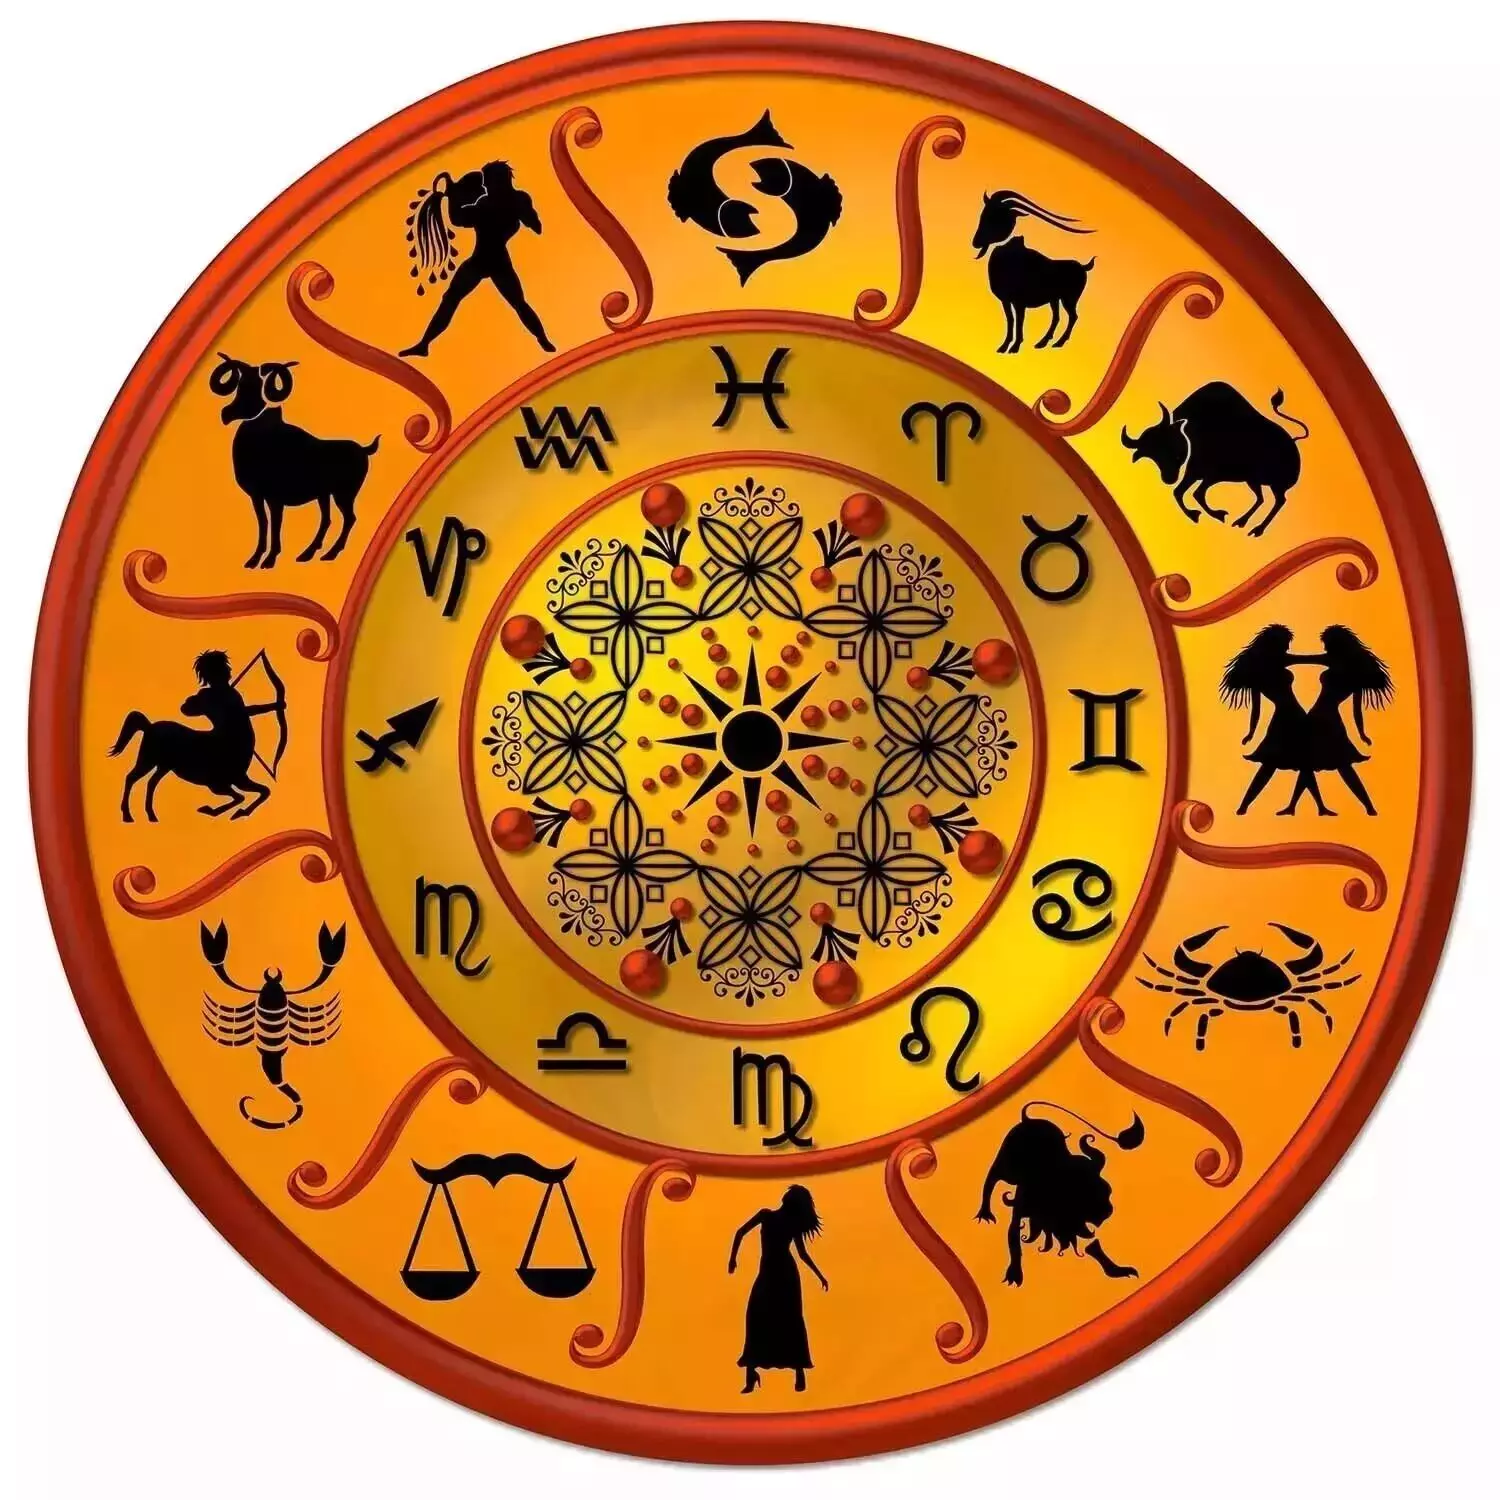 29 November – Know your todays horoscope